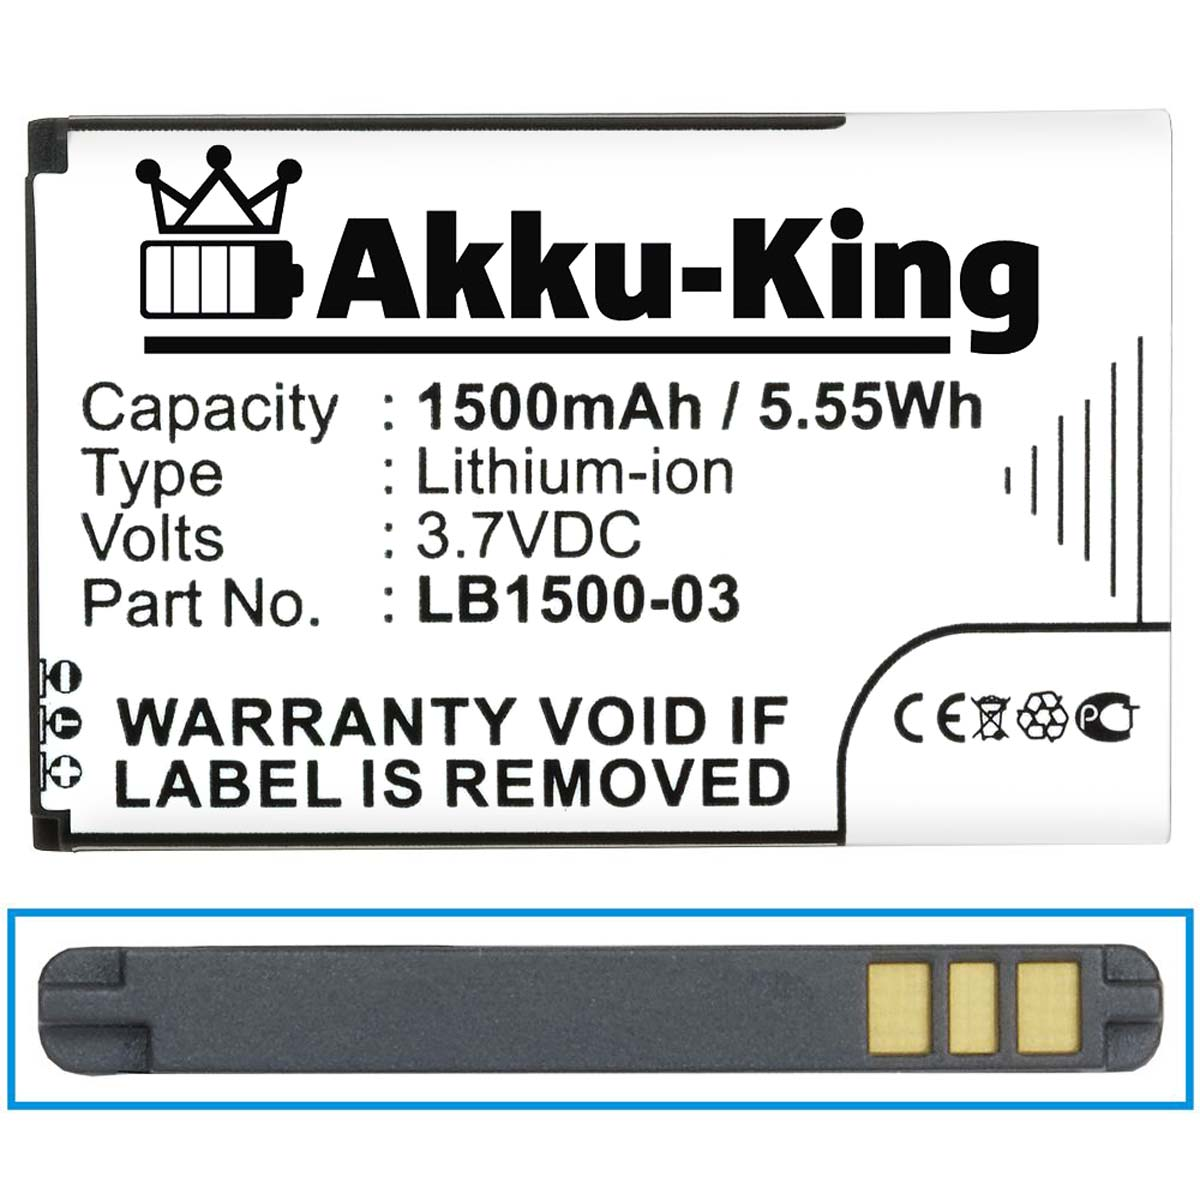 mit 1500mAh LB1500-03 Huawei Akku 3.7 Li-Ion kompatibel Volt, Handy-Akku, AKKU-KING